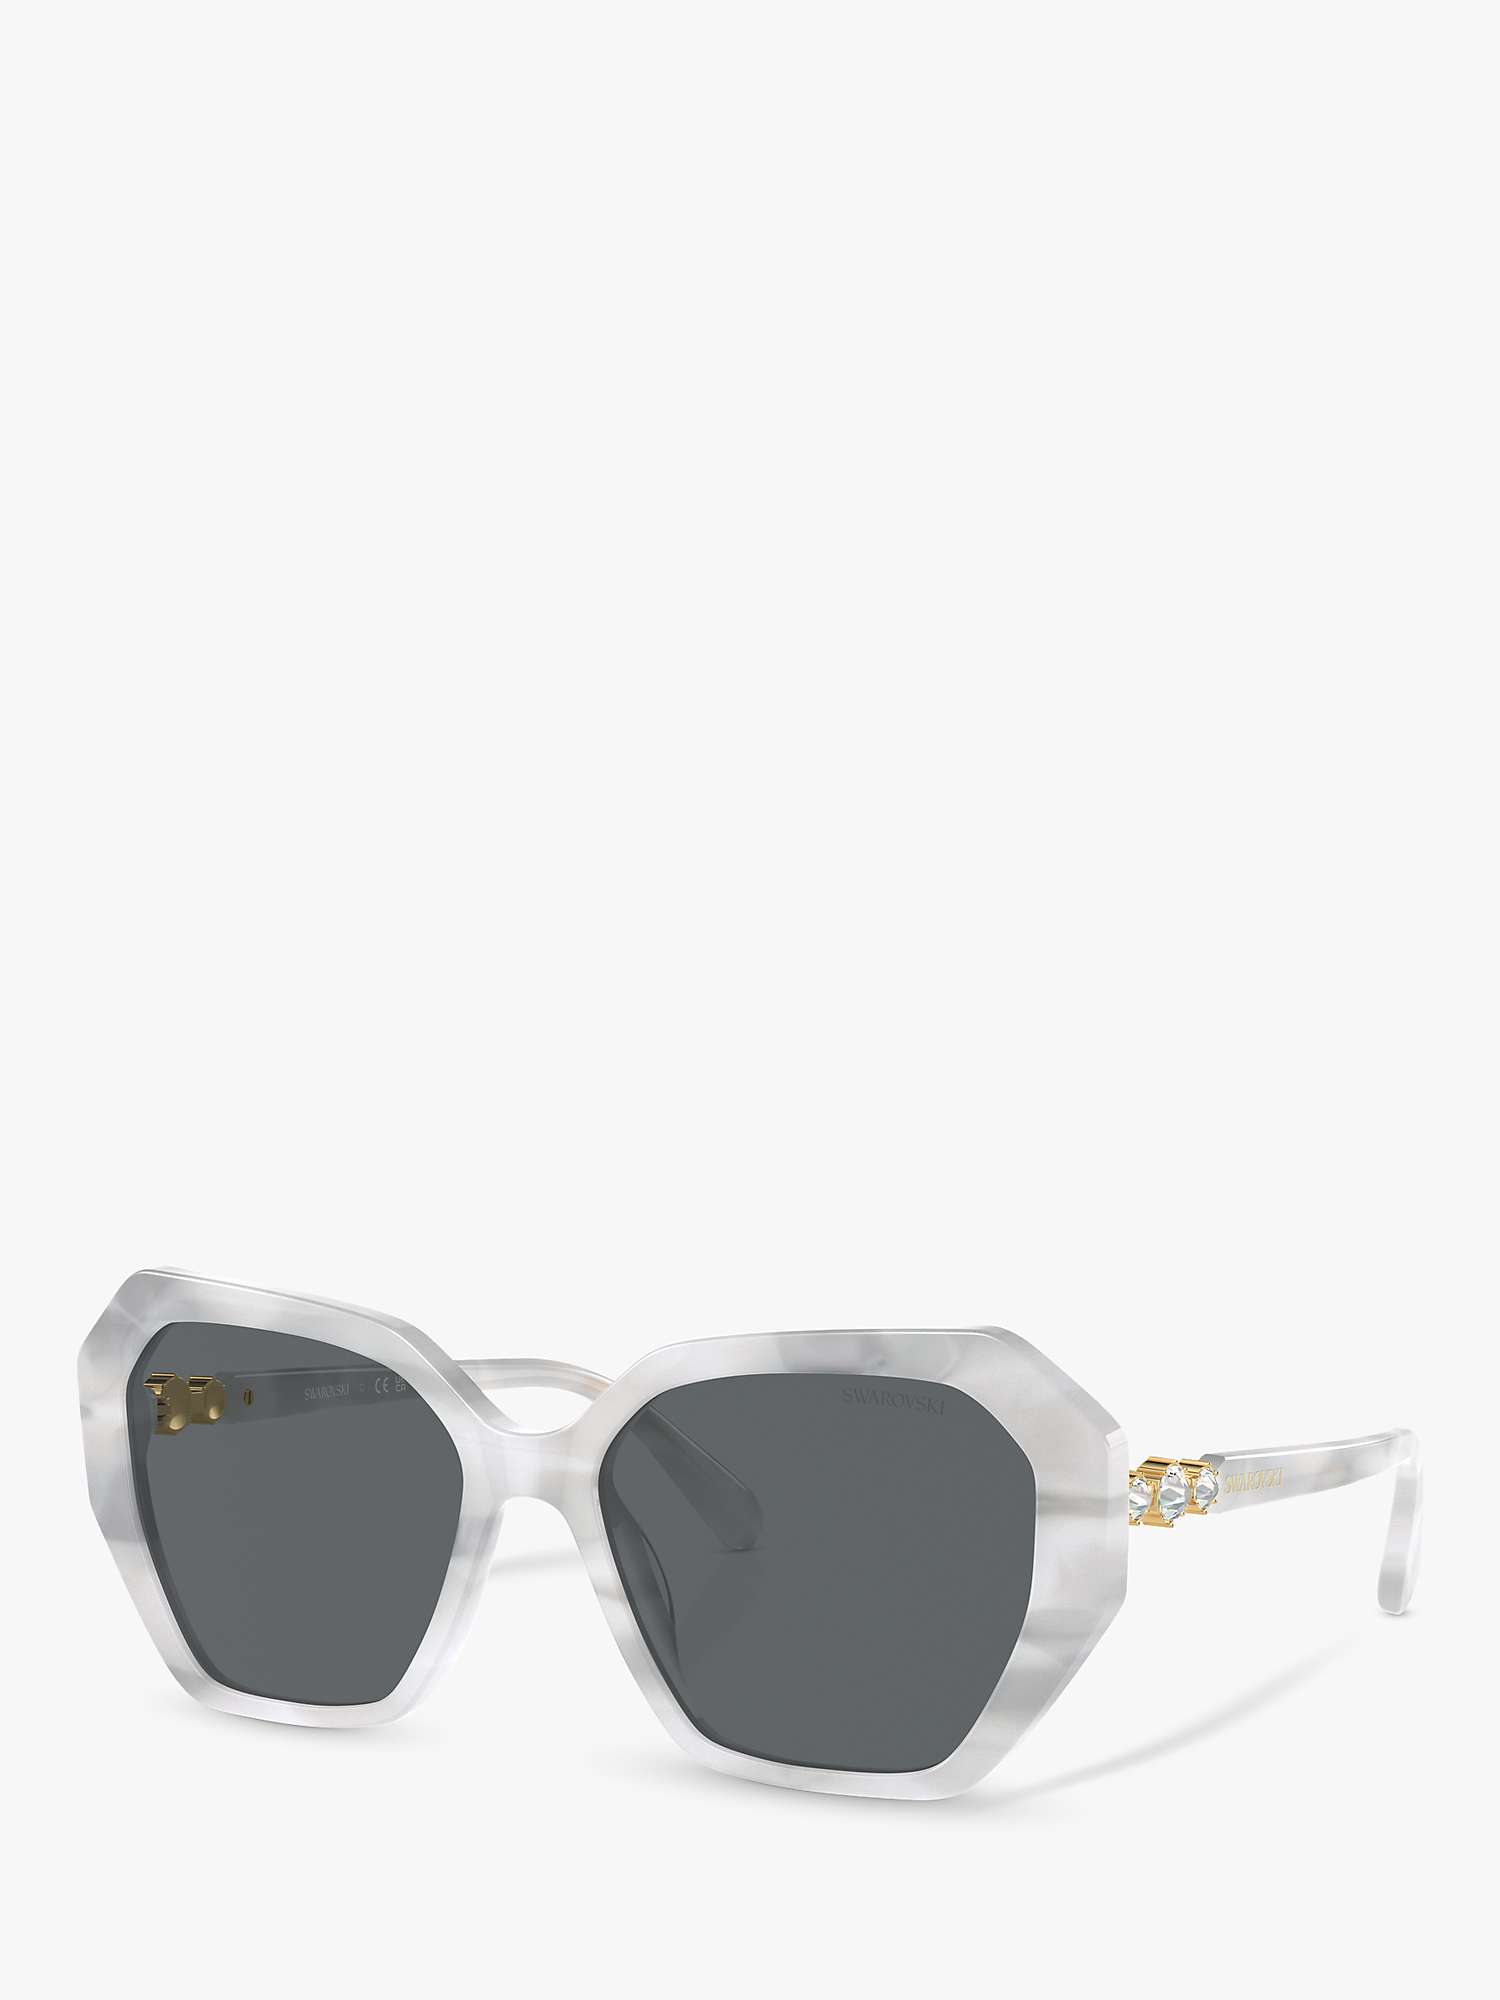 Buy Swarovski SK6017 Women's Butterfly Sunglasses, White Marble/Grey Online at johnlewis.com